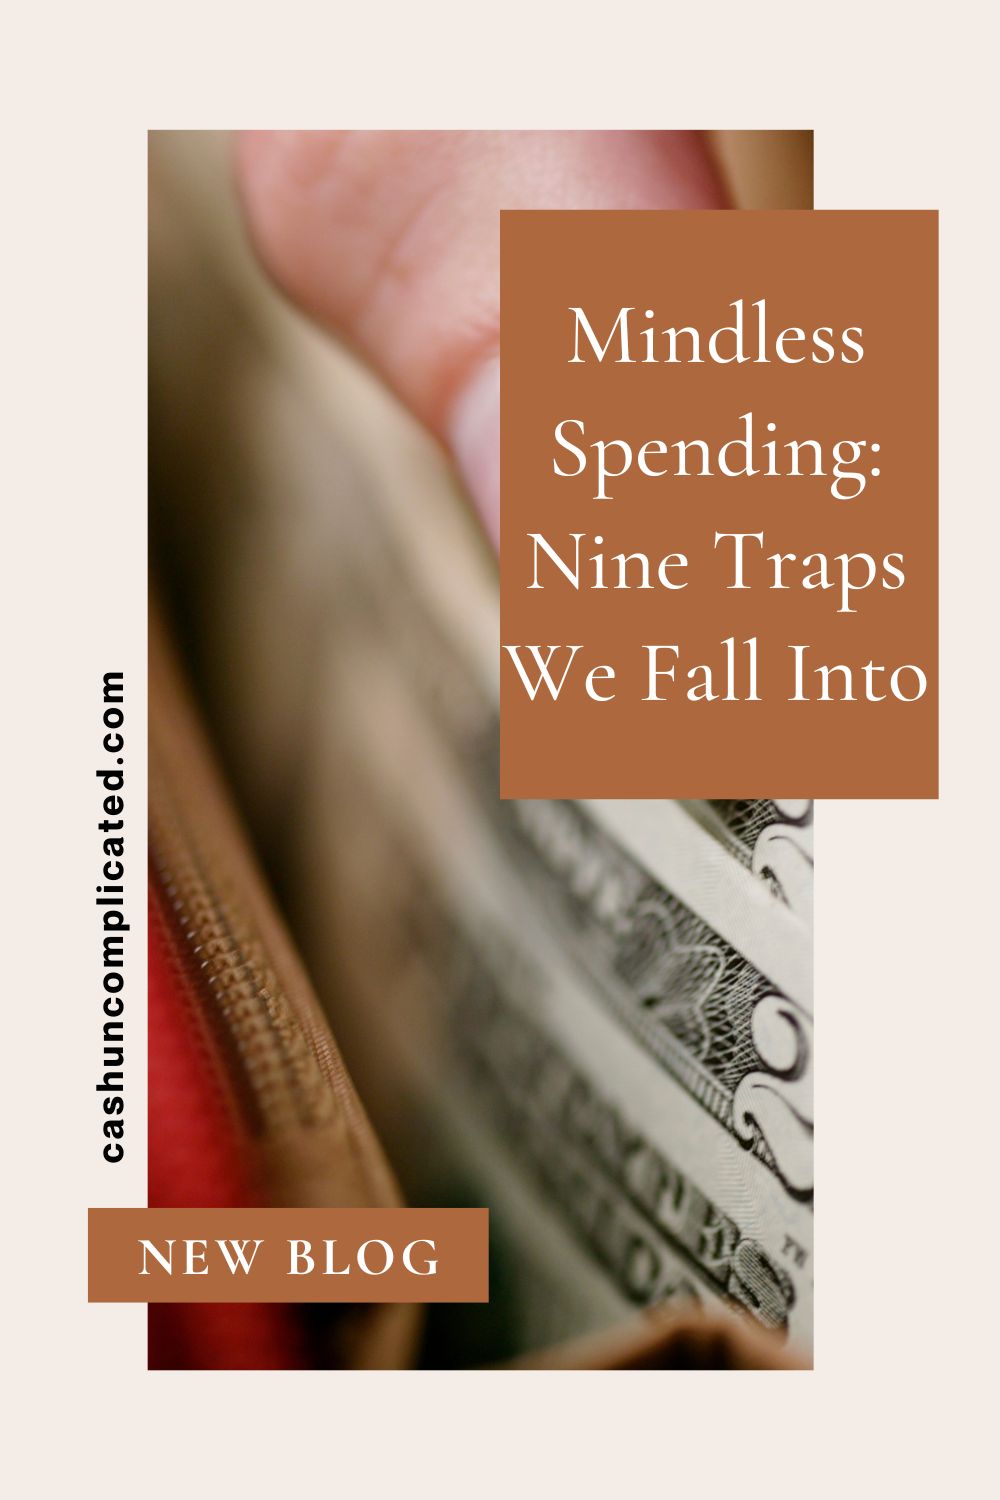 Mindless spending